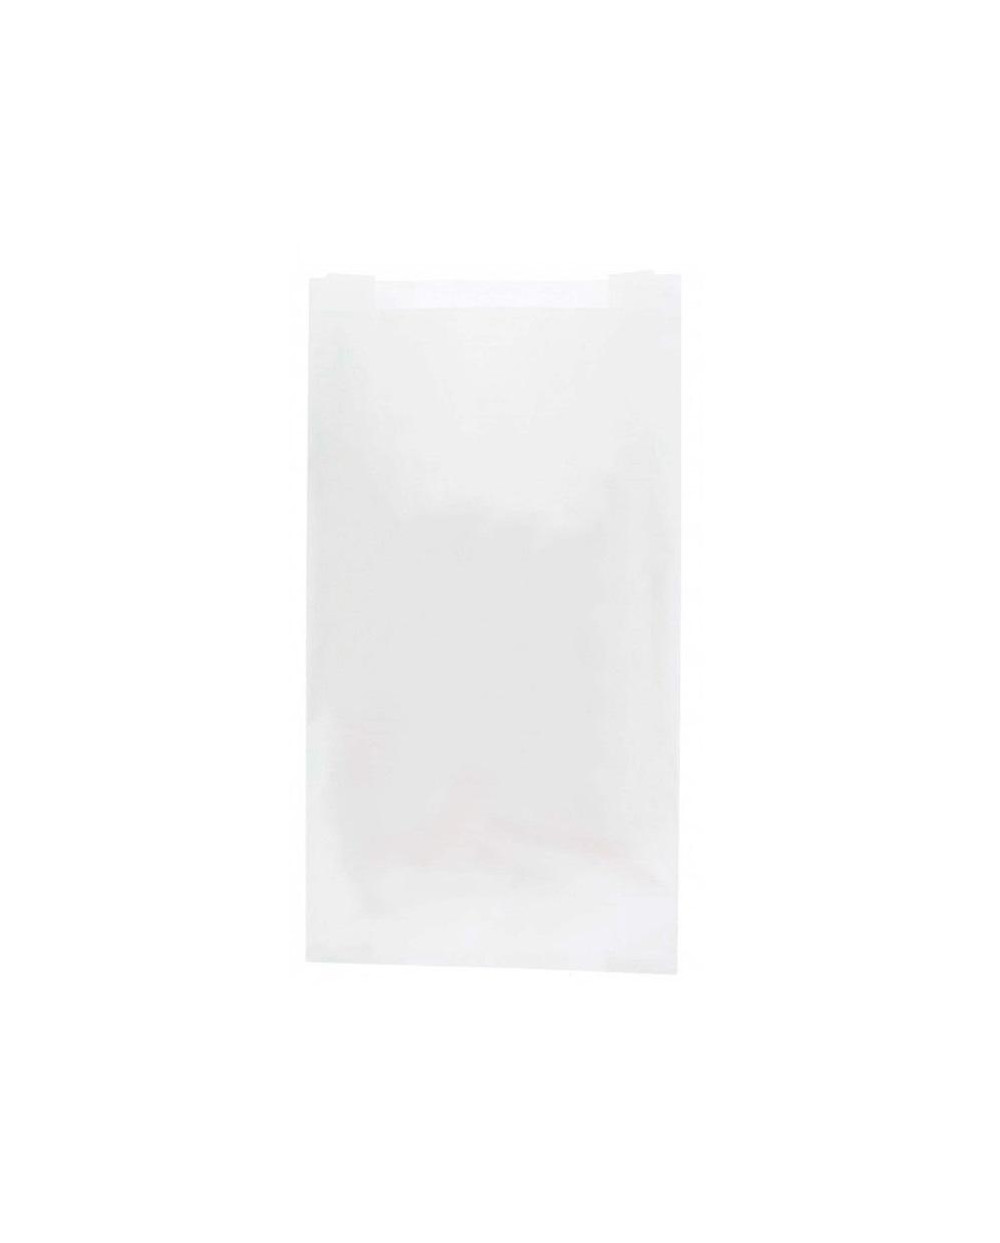 Bolsa papel blanca - 100 unidades (varias medidas)